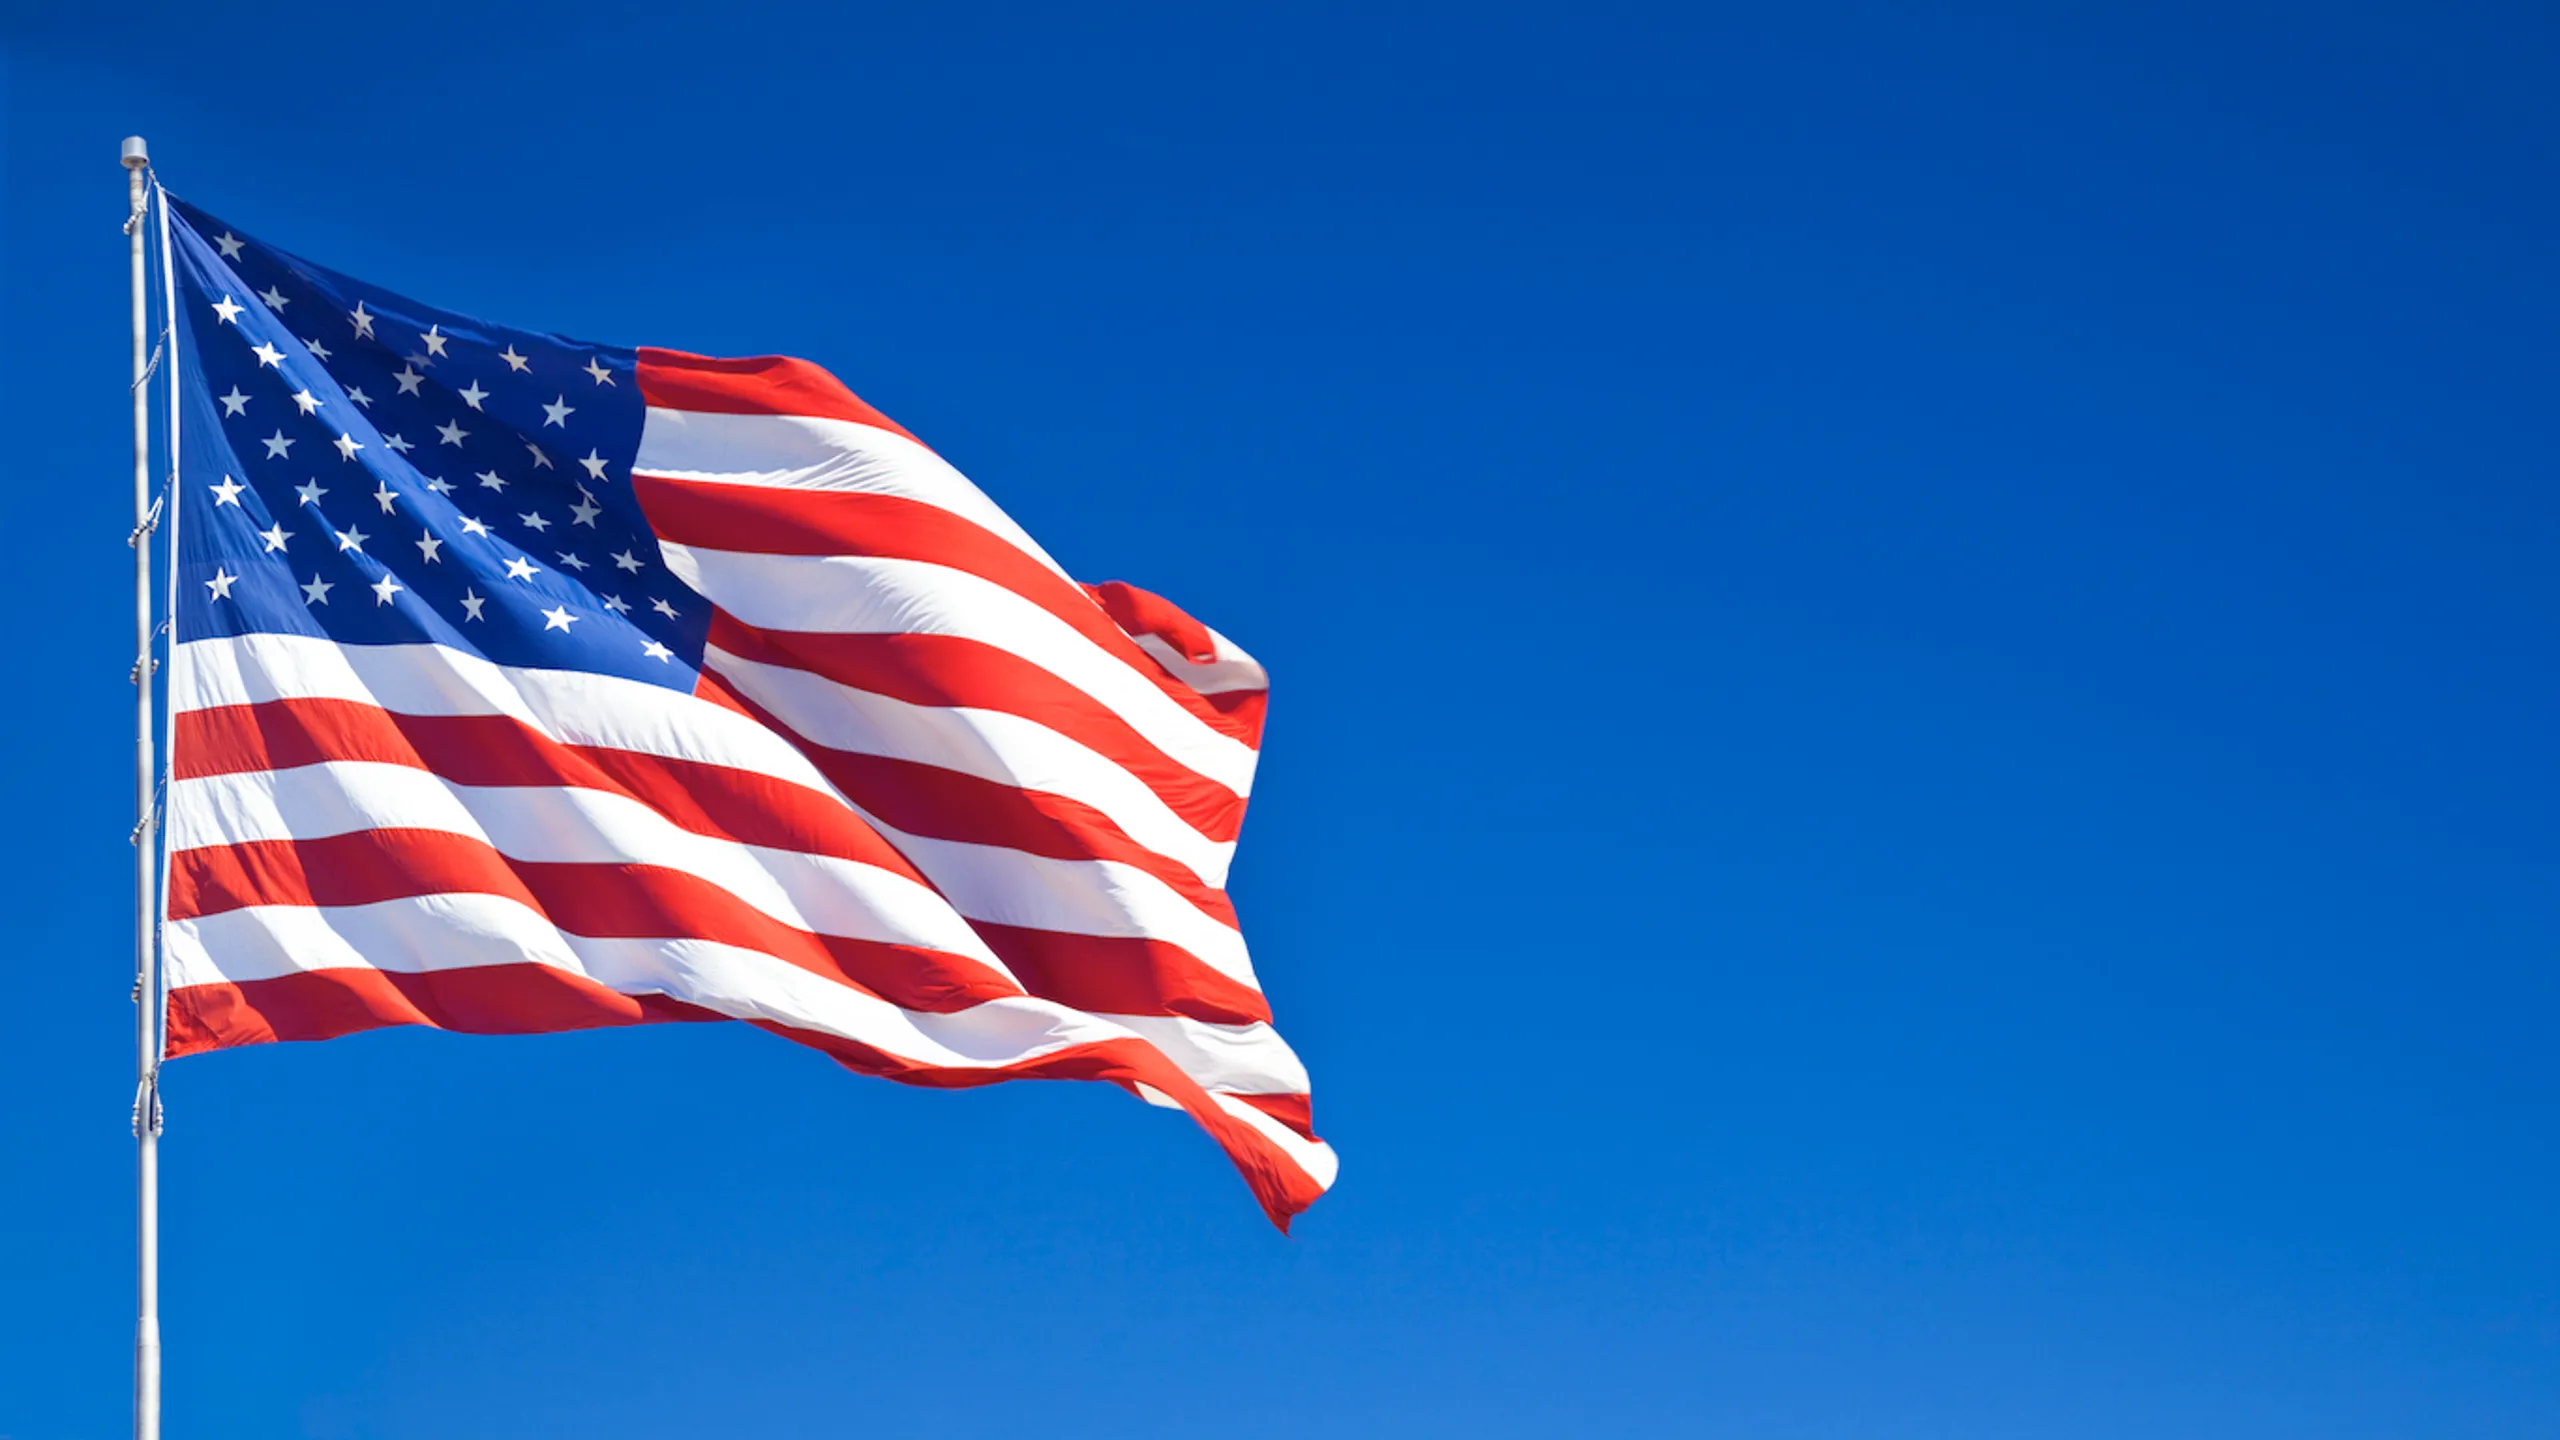 Usa official. Флаг США. The United States of America флаг. Россия и США. Американский флаг на фоне неба.